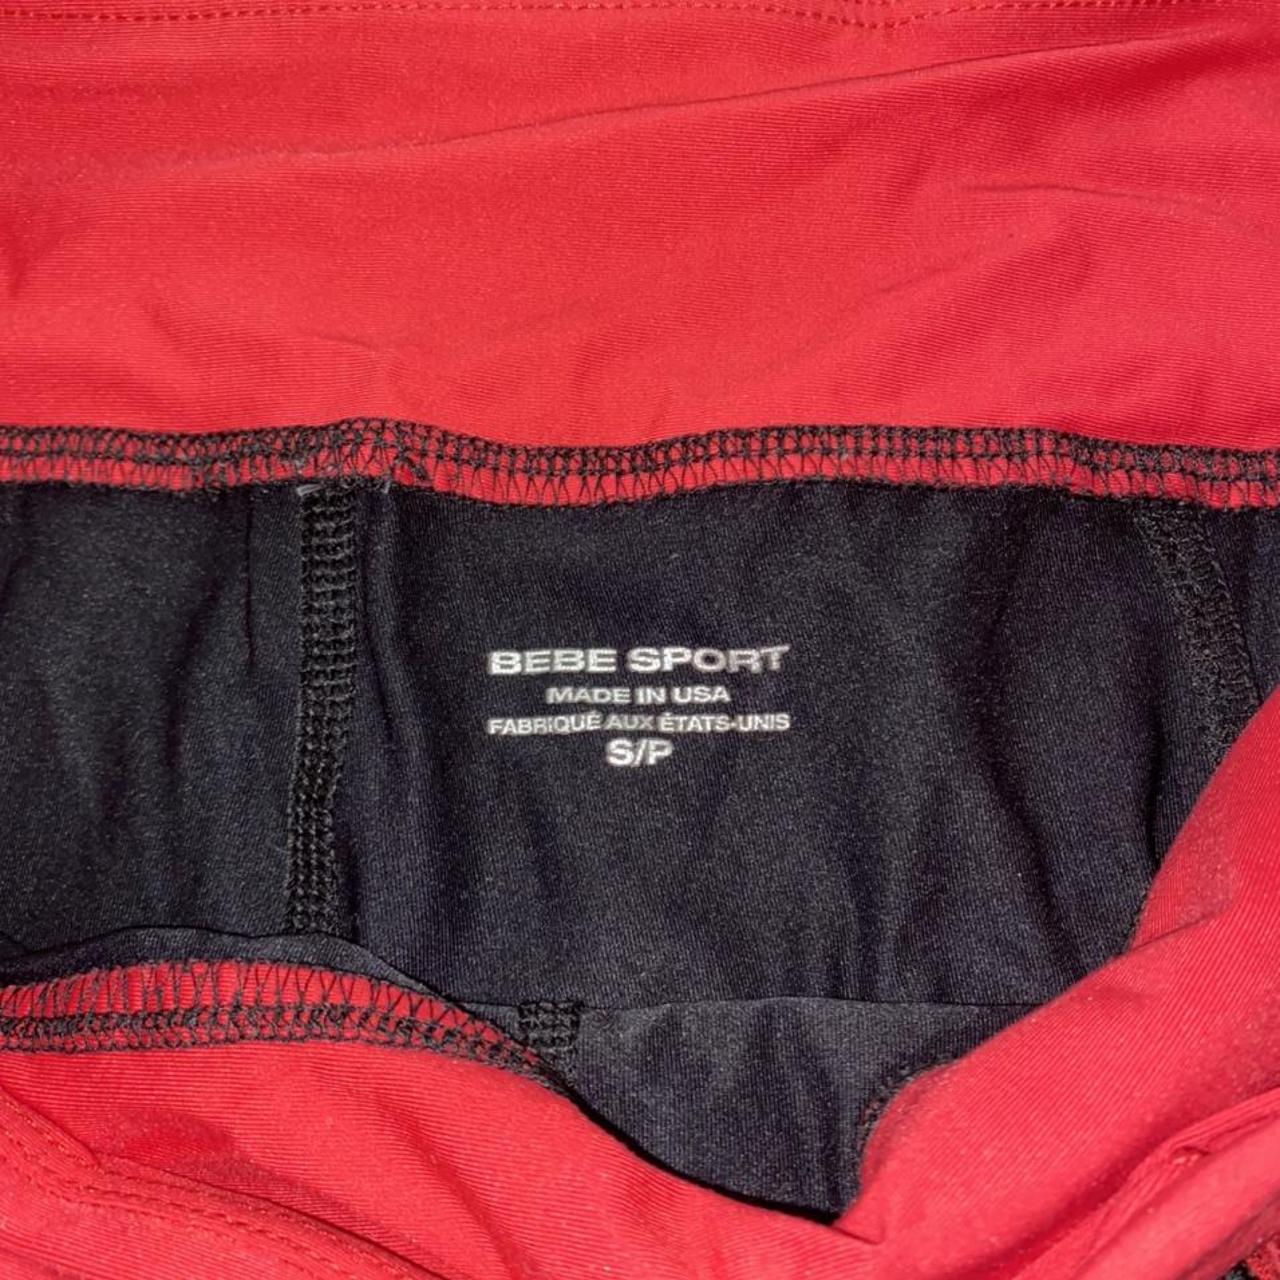 Product Image 2 - Bebe sport leggings! Size Small